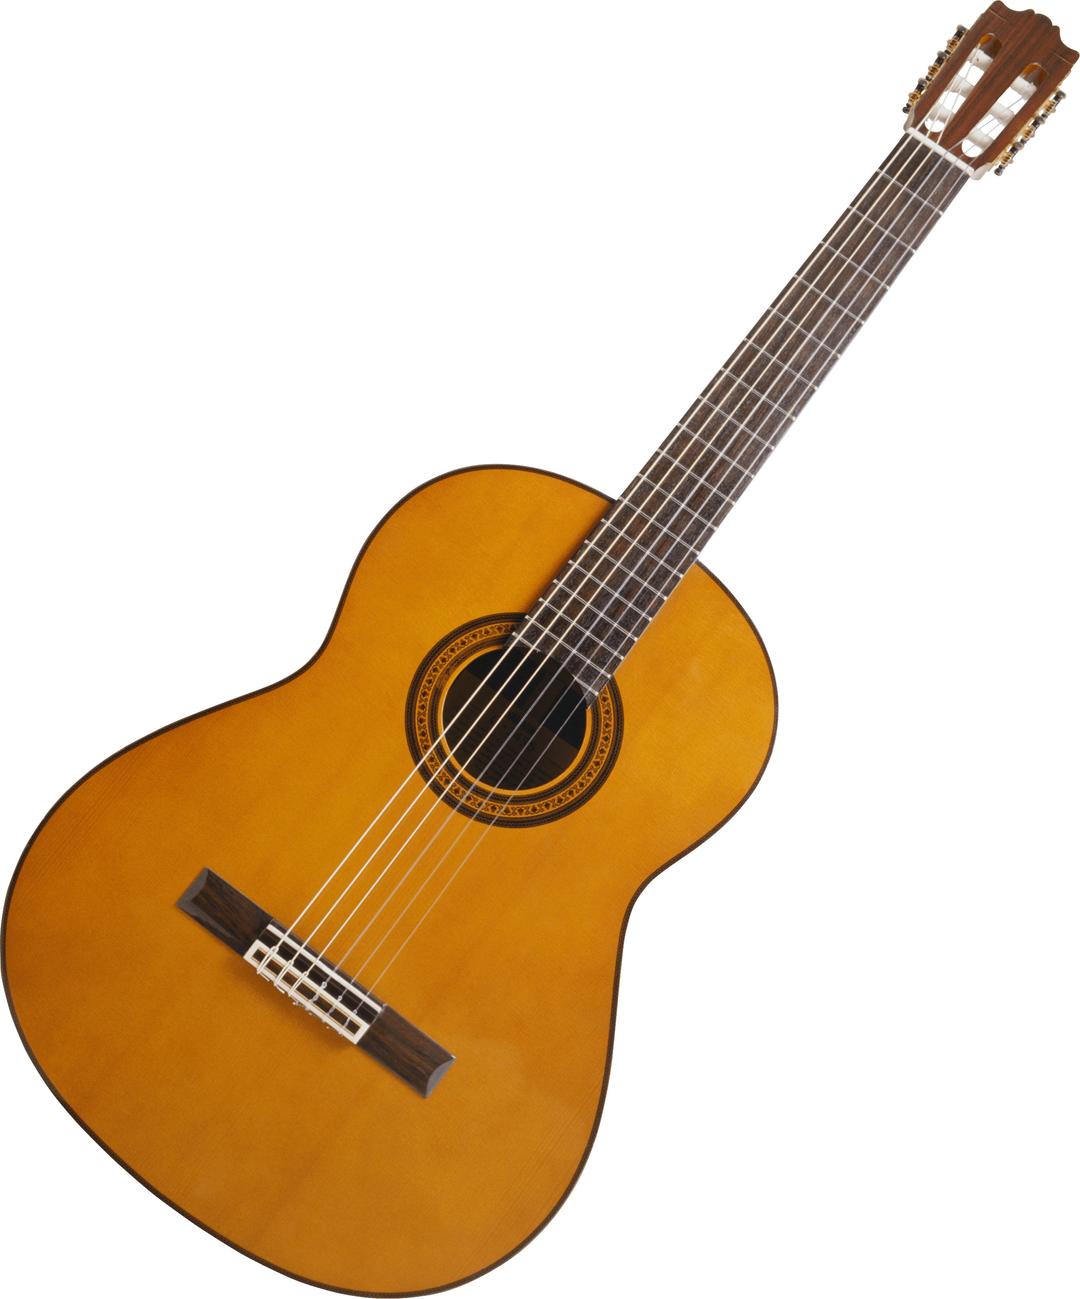 Acoustic Wood Guitar png transparent